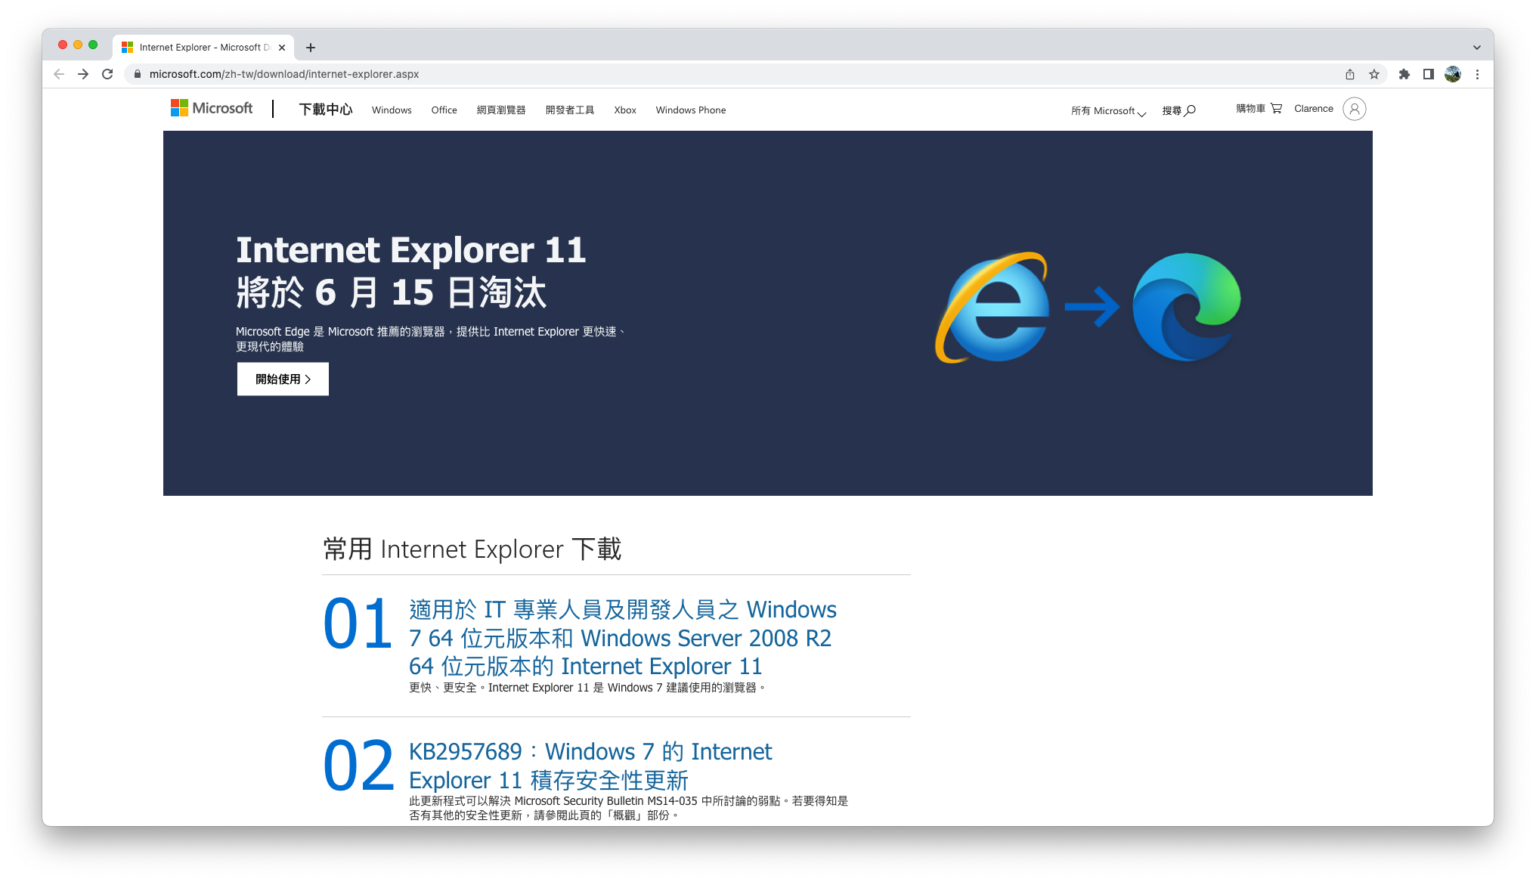 IE11图片预览完后，点击其他按钮，页面崩溃；谷歌正常 · Issue #333 · fengyuanchen/viewerjs · GitHub